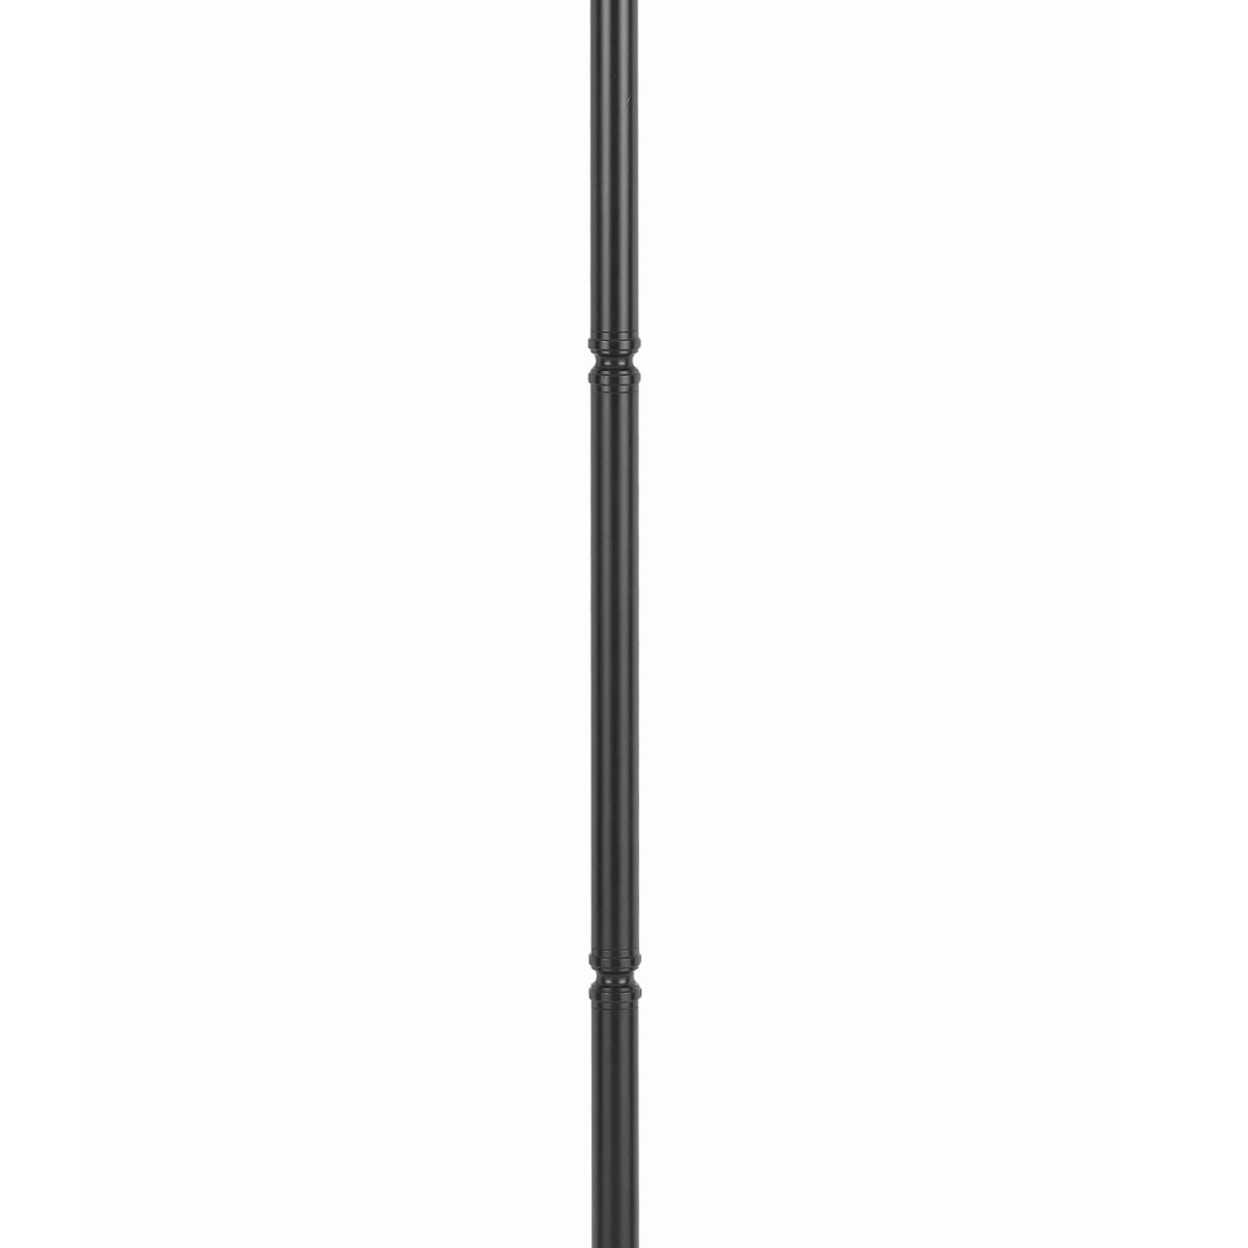 3 Way Glass Shade Torchiere Floor Lamp With Metal Pedestal Base, Black- Saltoro Sherpi